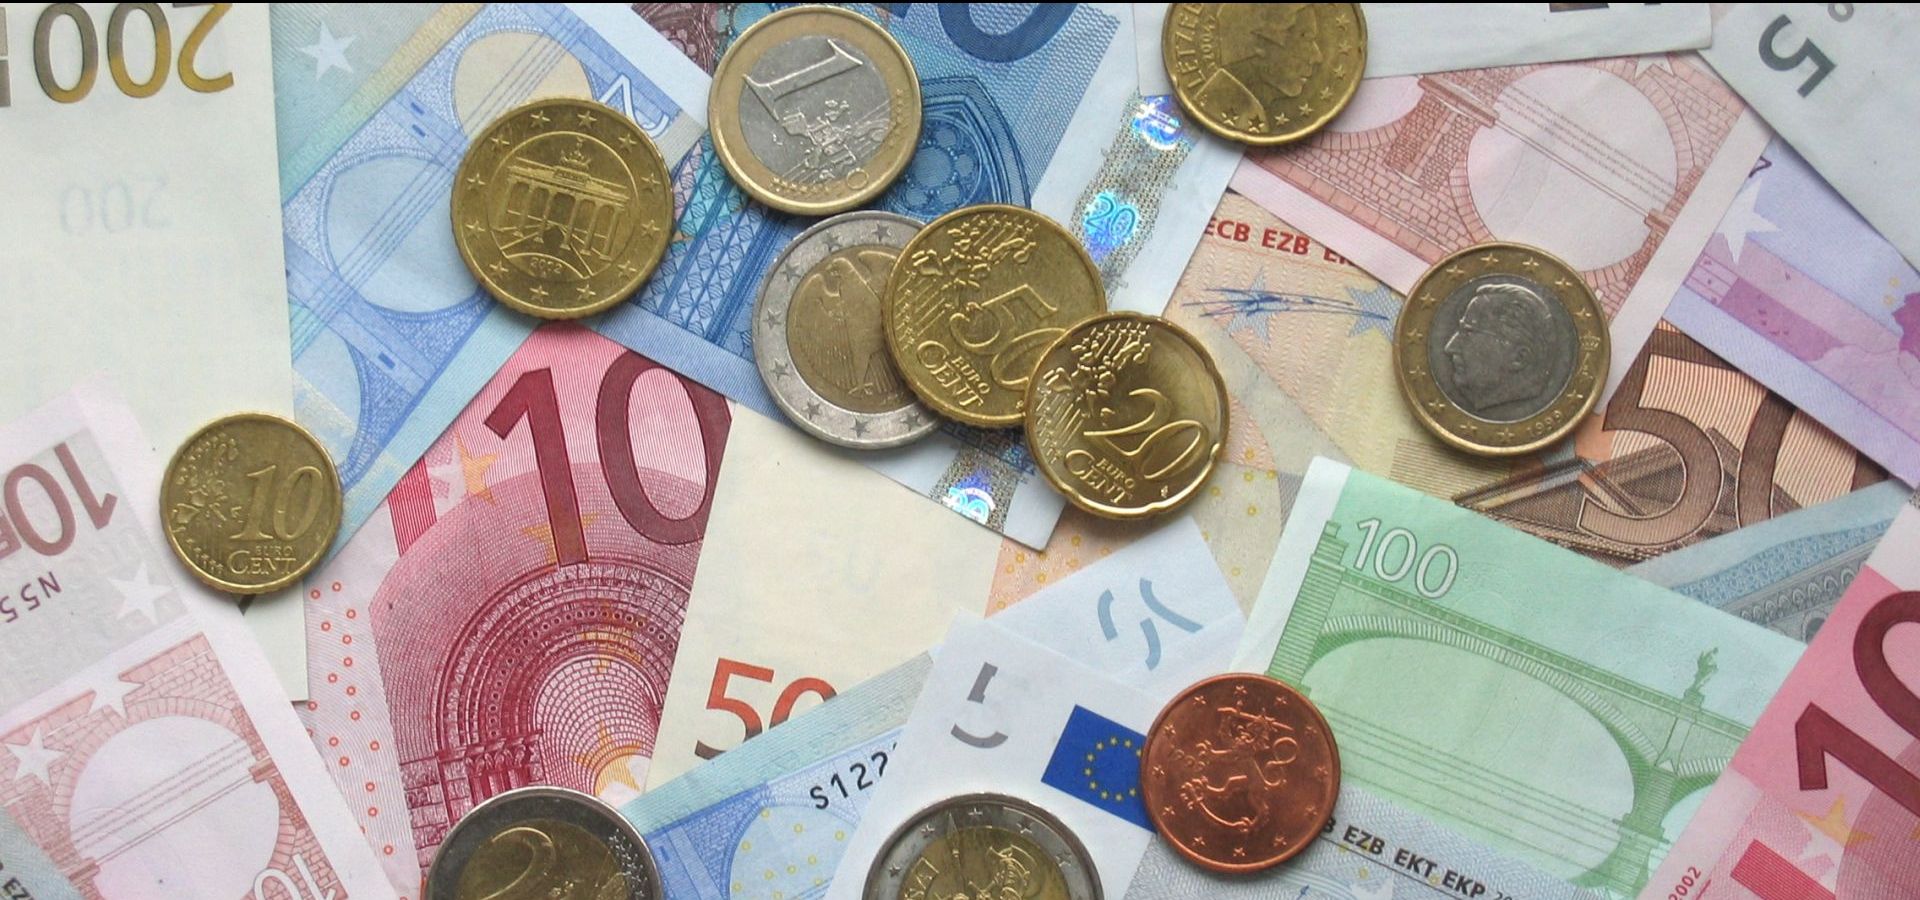 bank notes and various euro coins